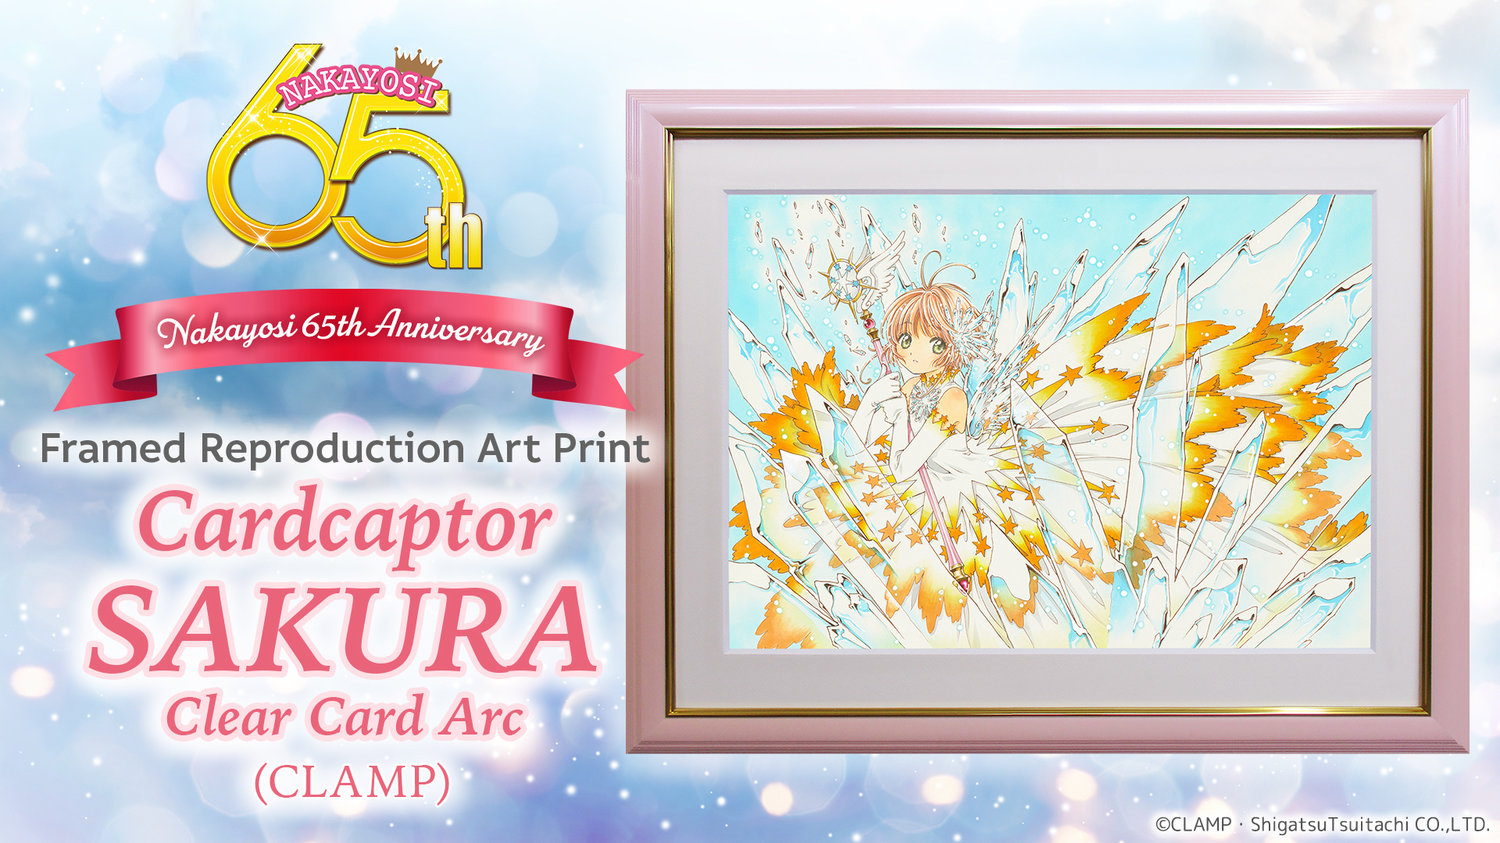 Nakayosi 65th Anniversary Framed Reproduction Art Print: Cardcaptor Sakura Clear Card Arc (CLAMP)